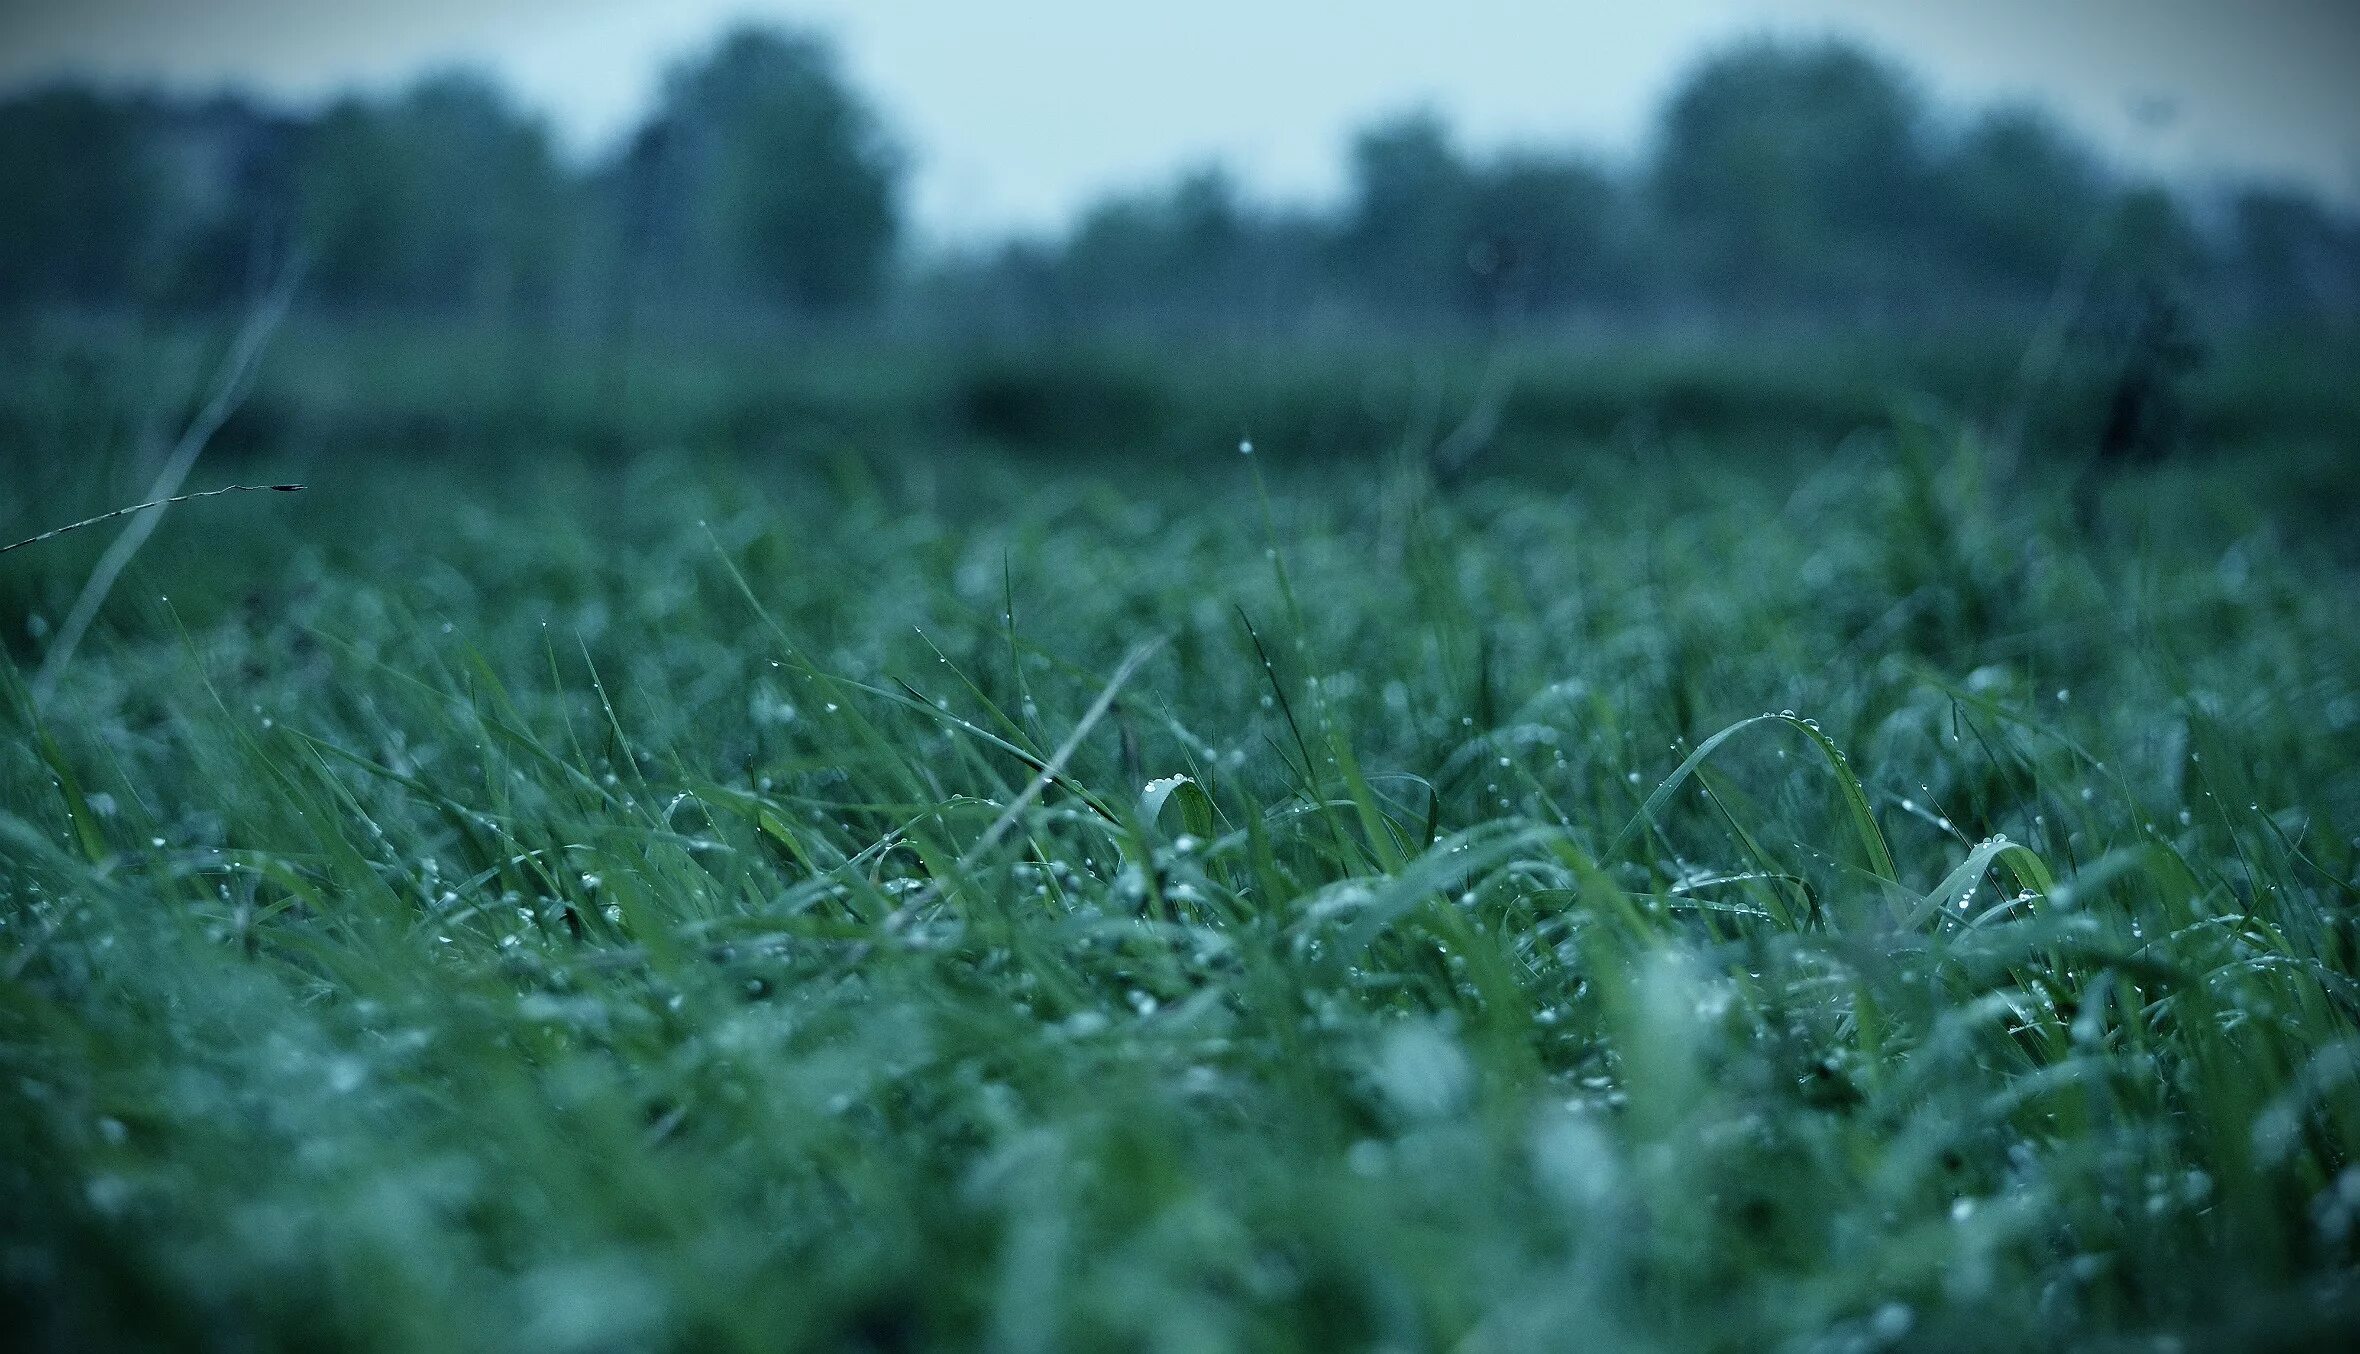 Трава омытая дождем. Трава после дождя. Трава поле. Мокрый газон. Эстетика травы в поле.